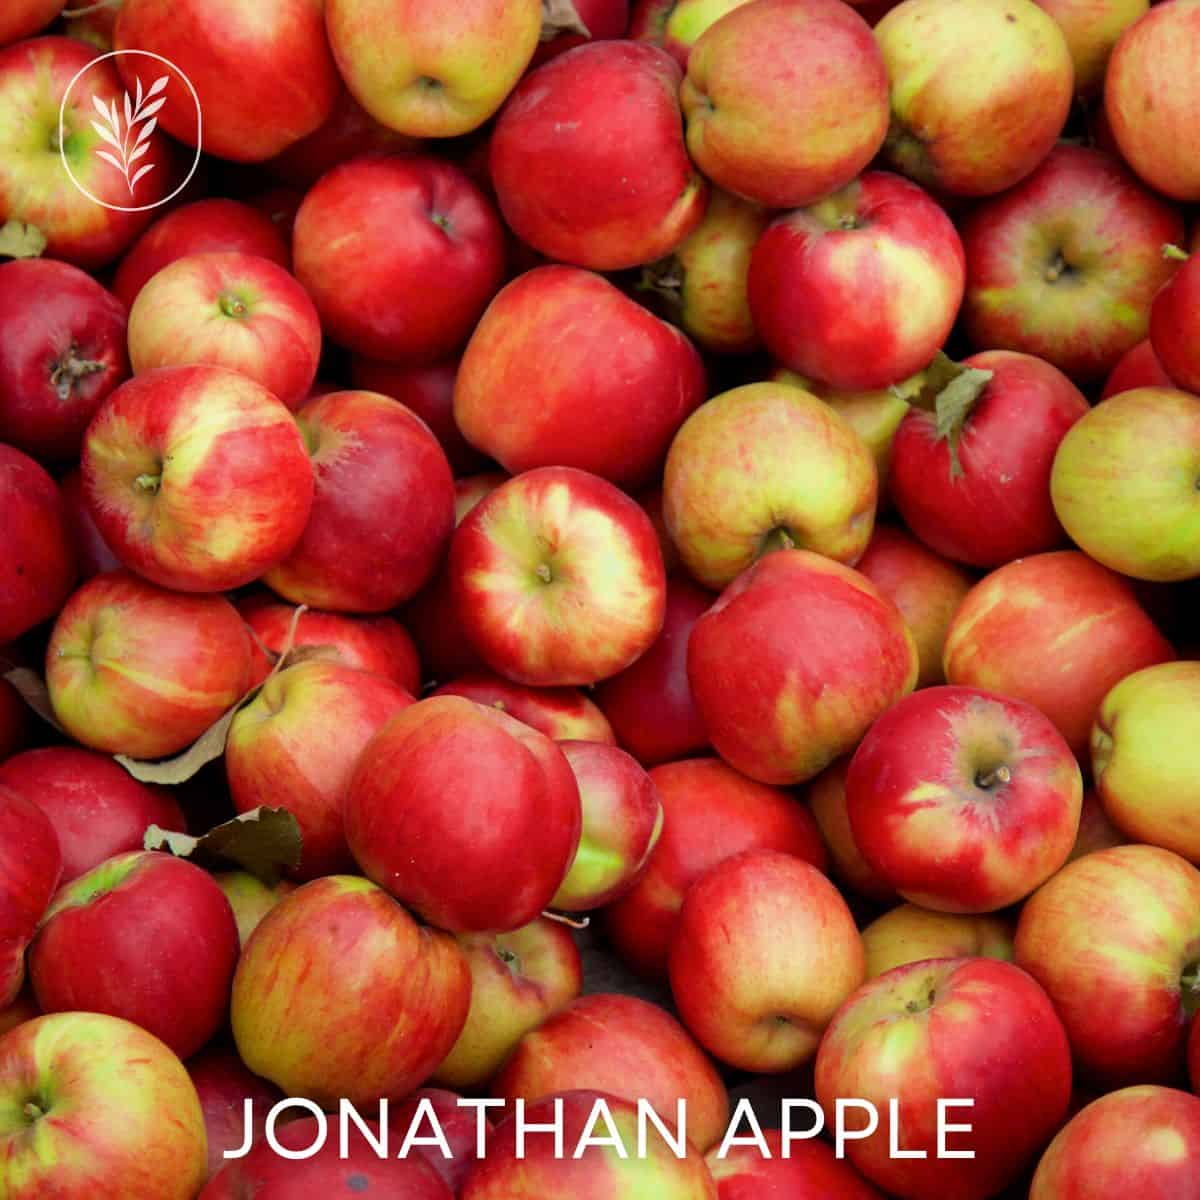 Jonathan apple via @home4theharvest